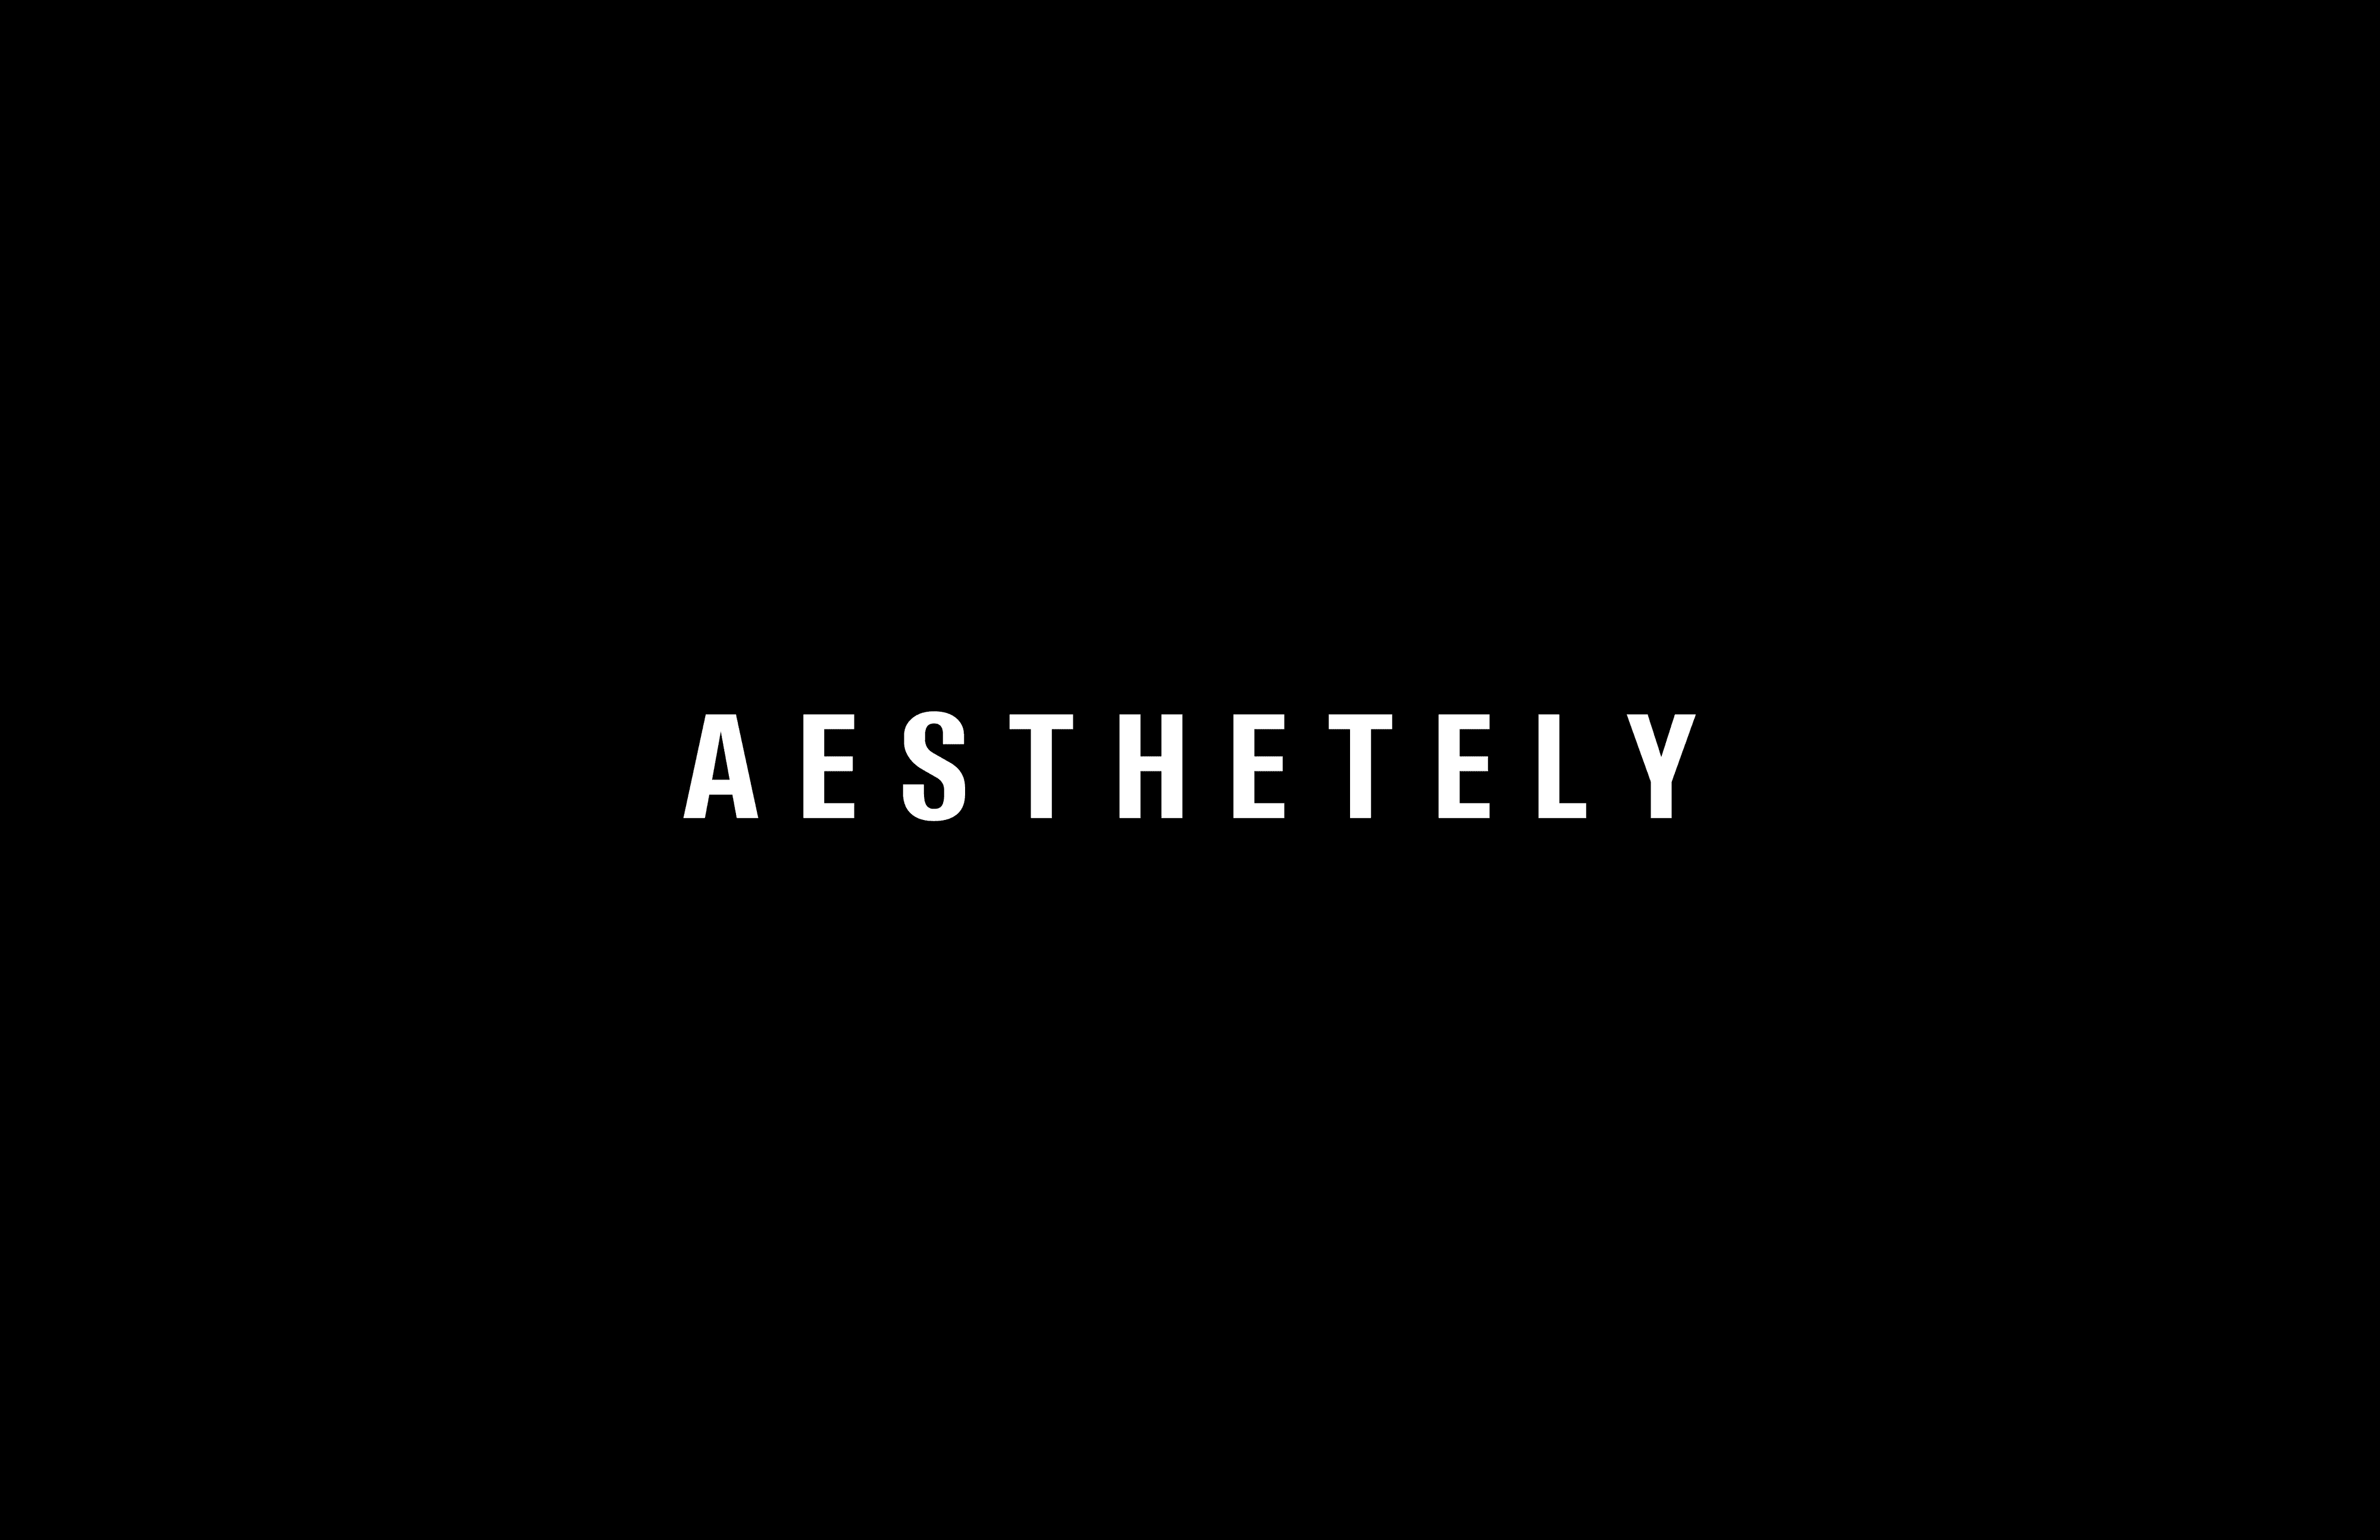 AESTHETELY